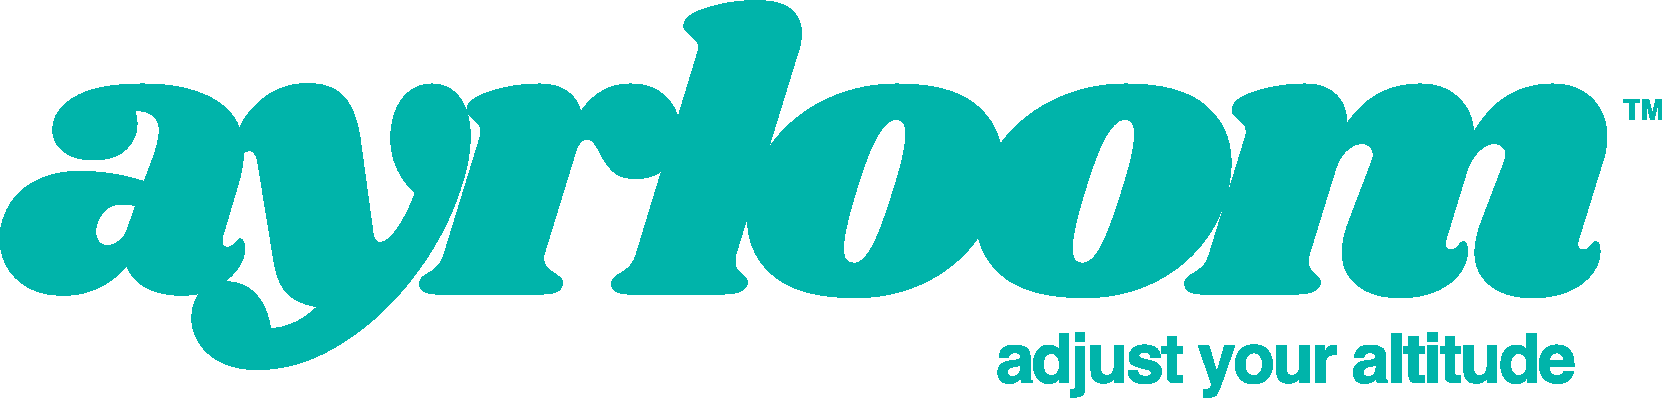 Ayrloom Cannabis Brand Logo